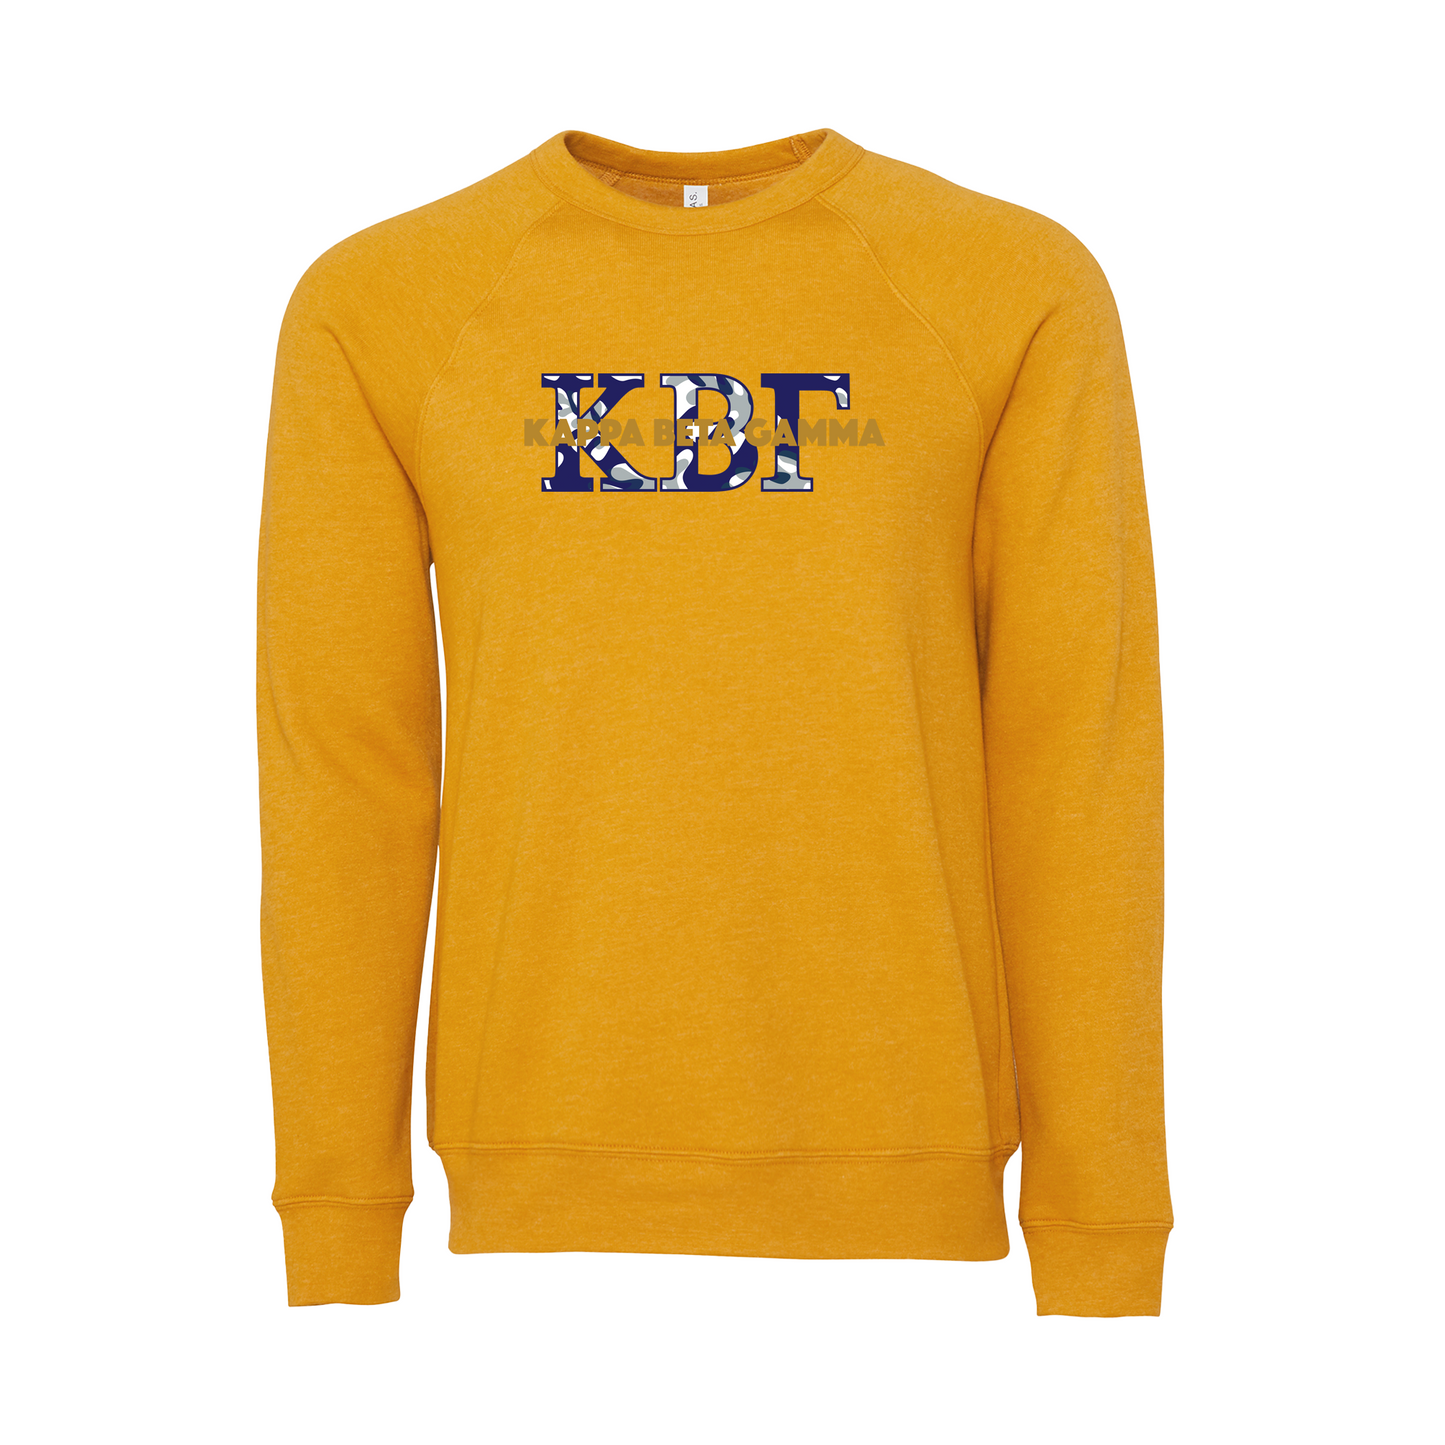 Kappa Beta Gamma Applique Letters Crewneck Sweatshirt